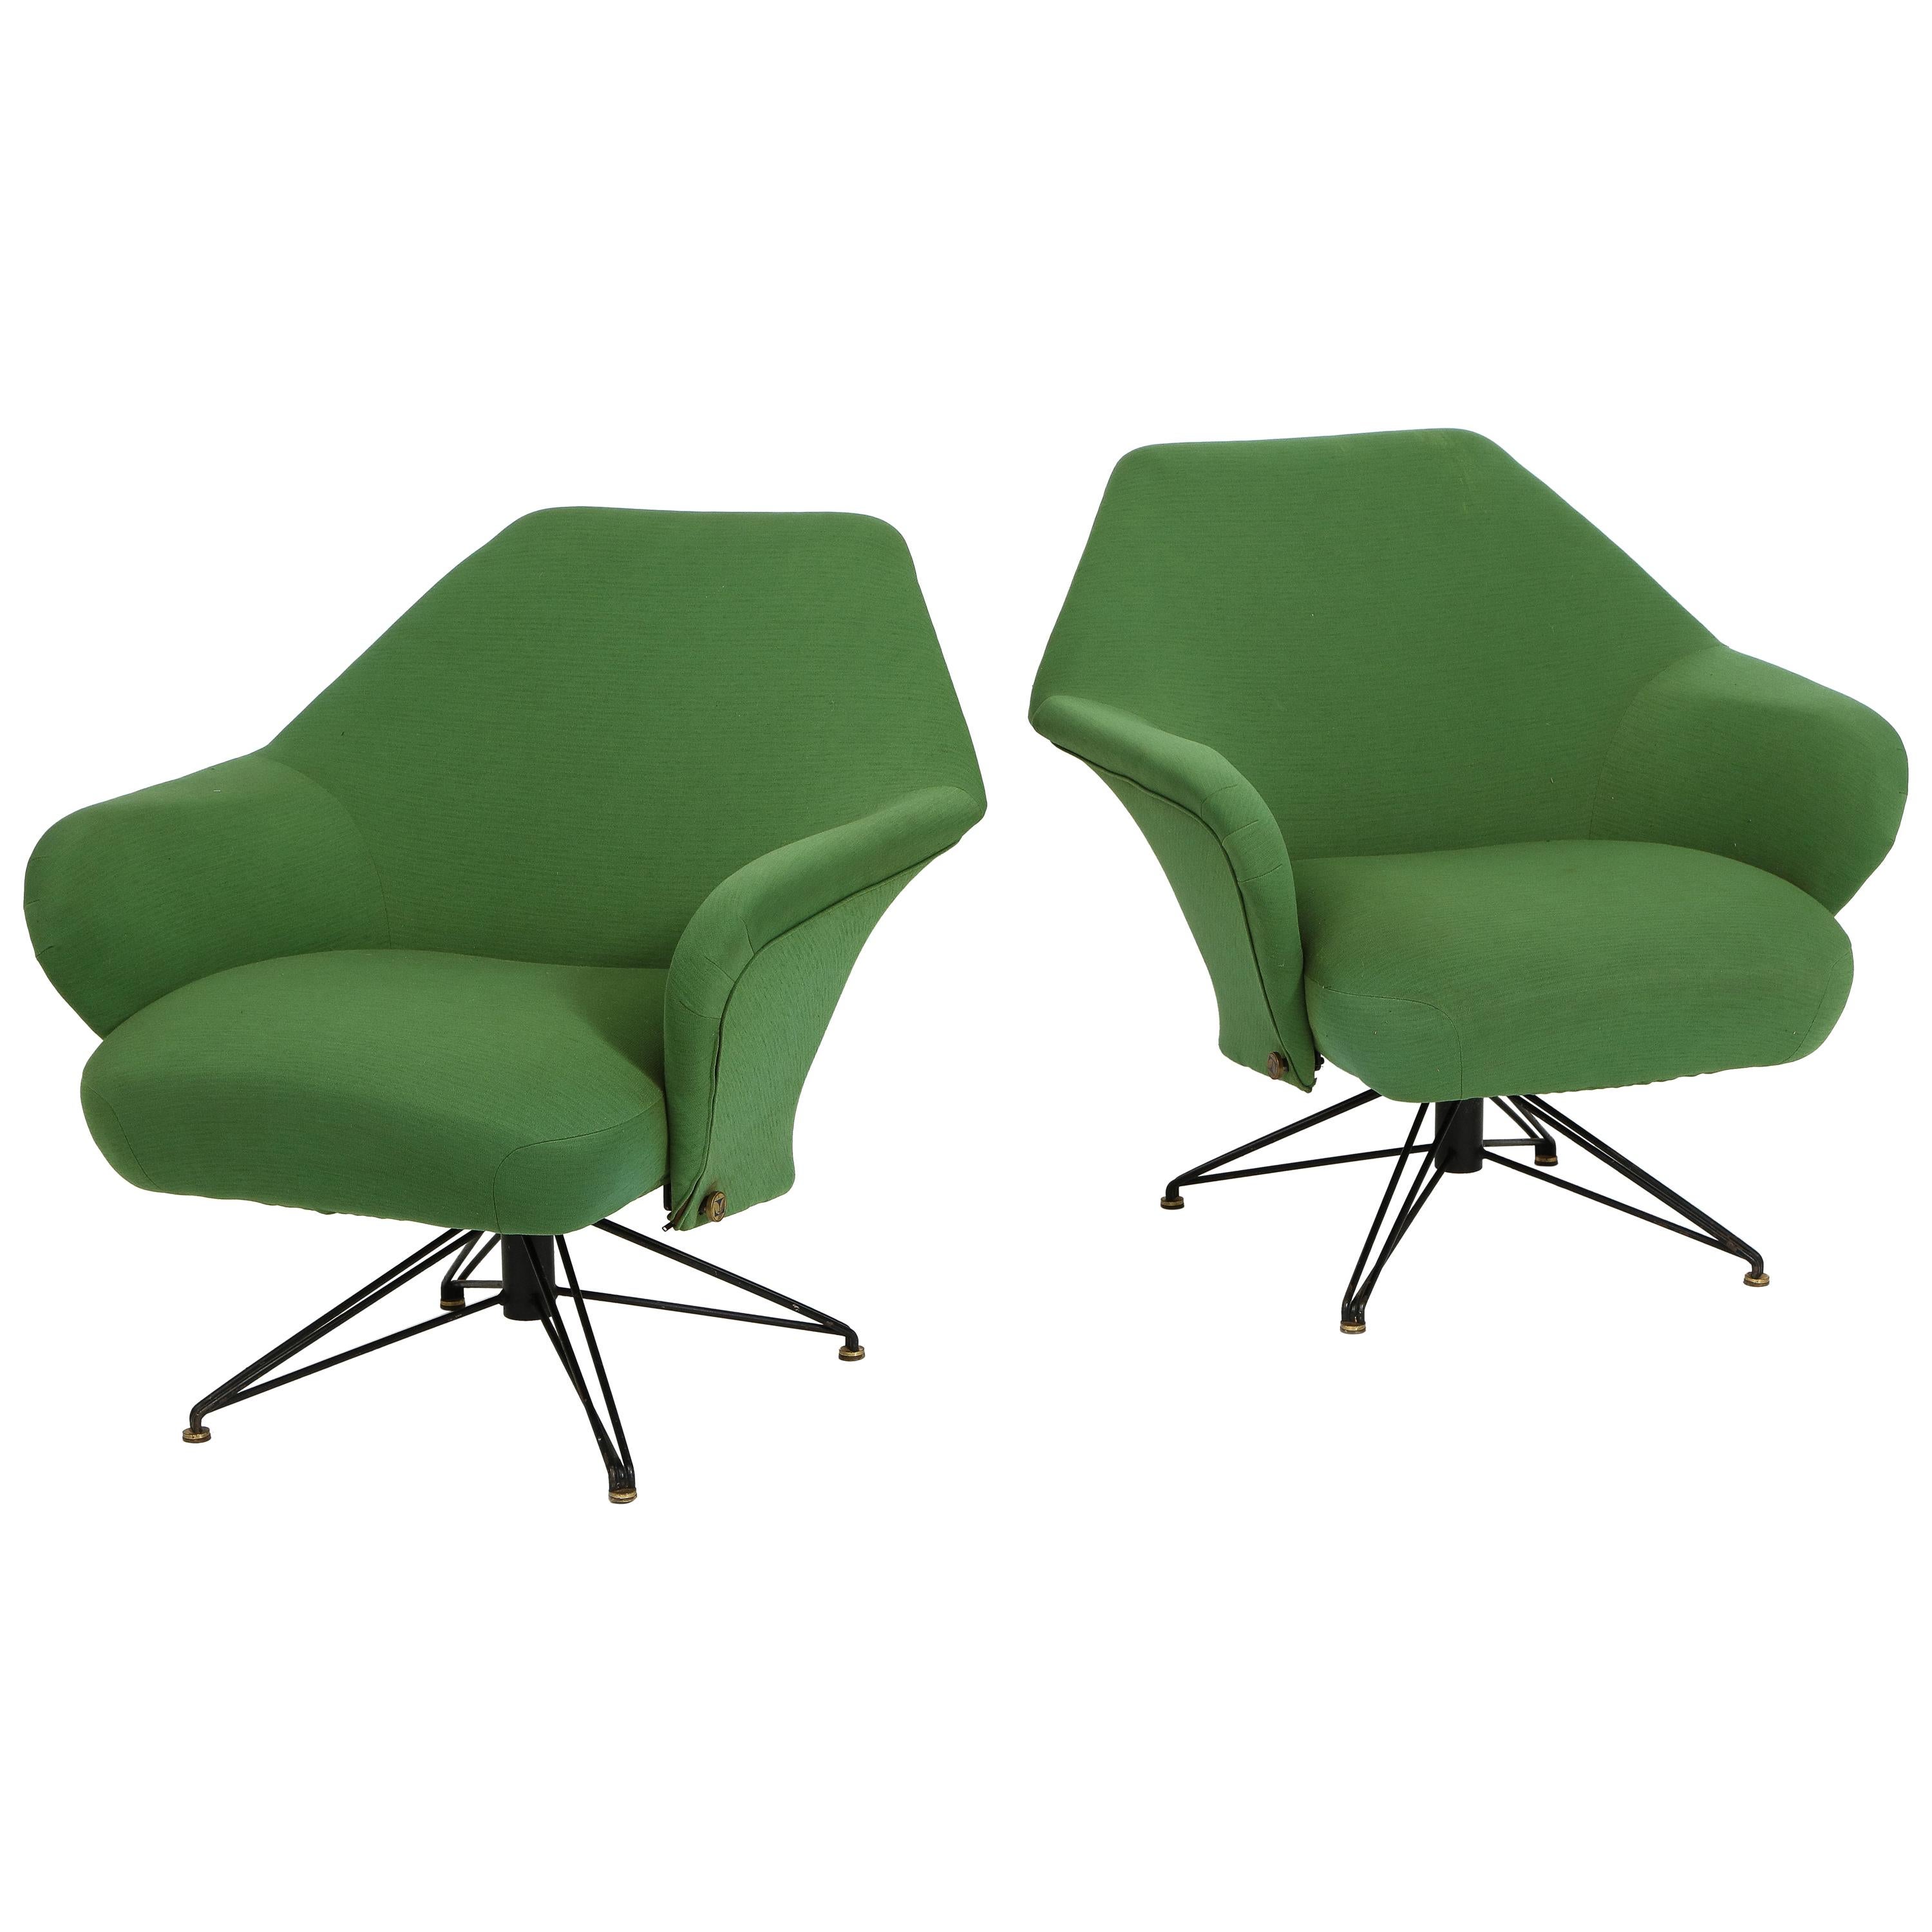 Osvaldo Borsani Pair of Green P32 Chairs for Tecno, Italy 1950s For Sale